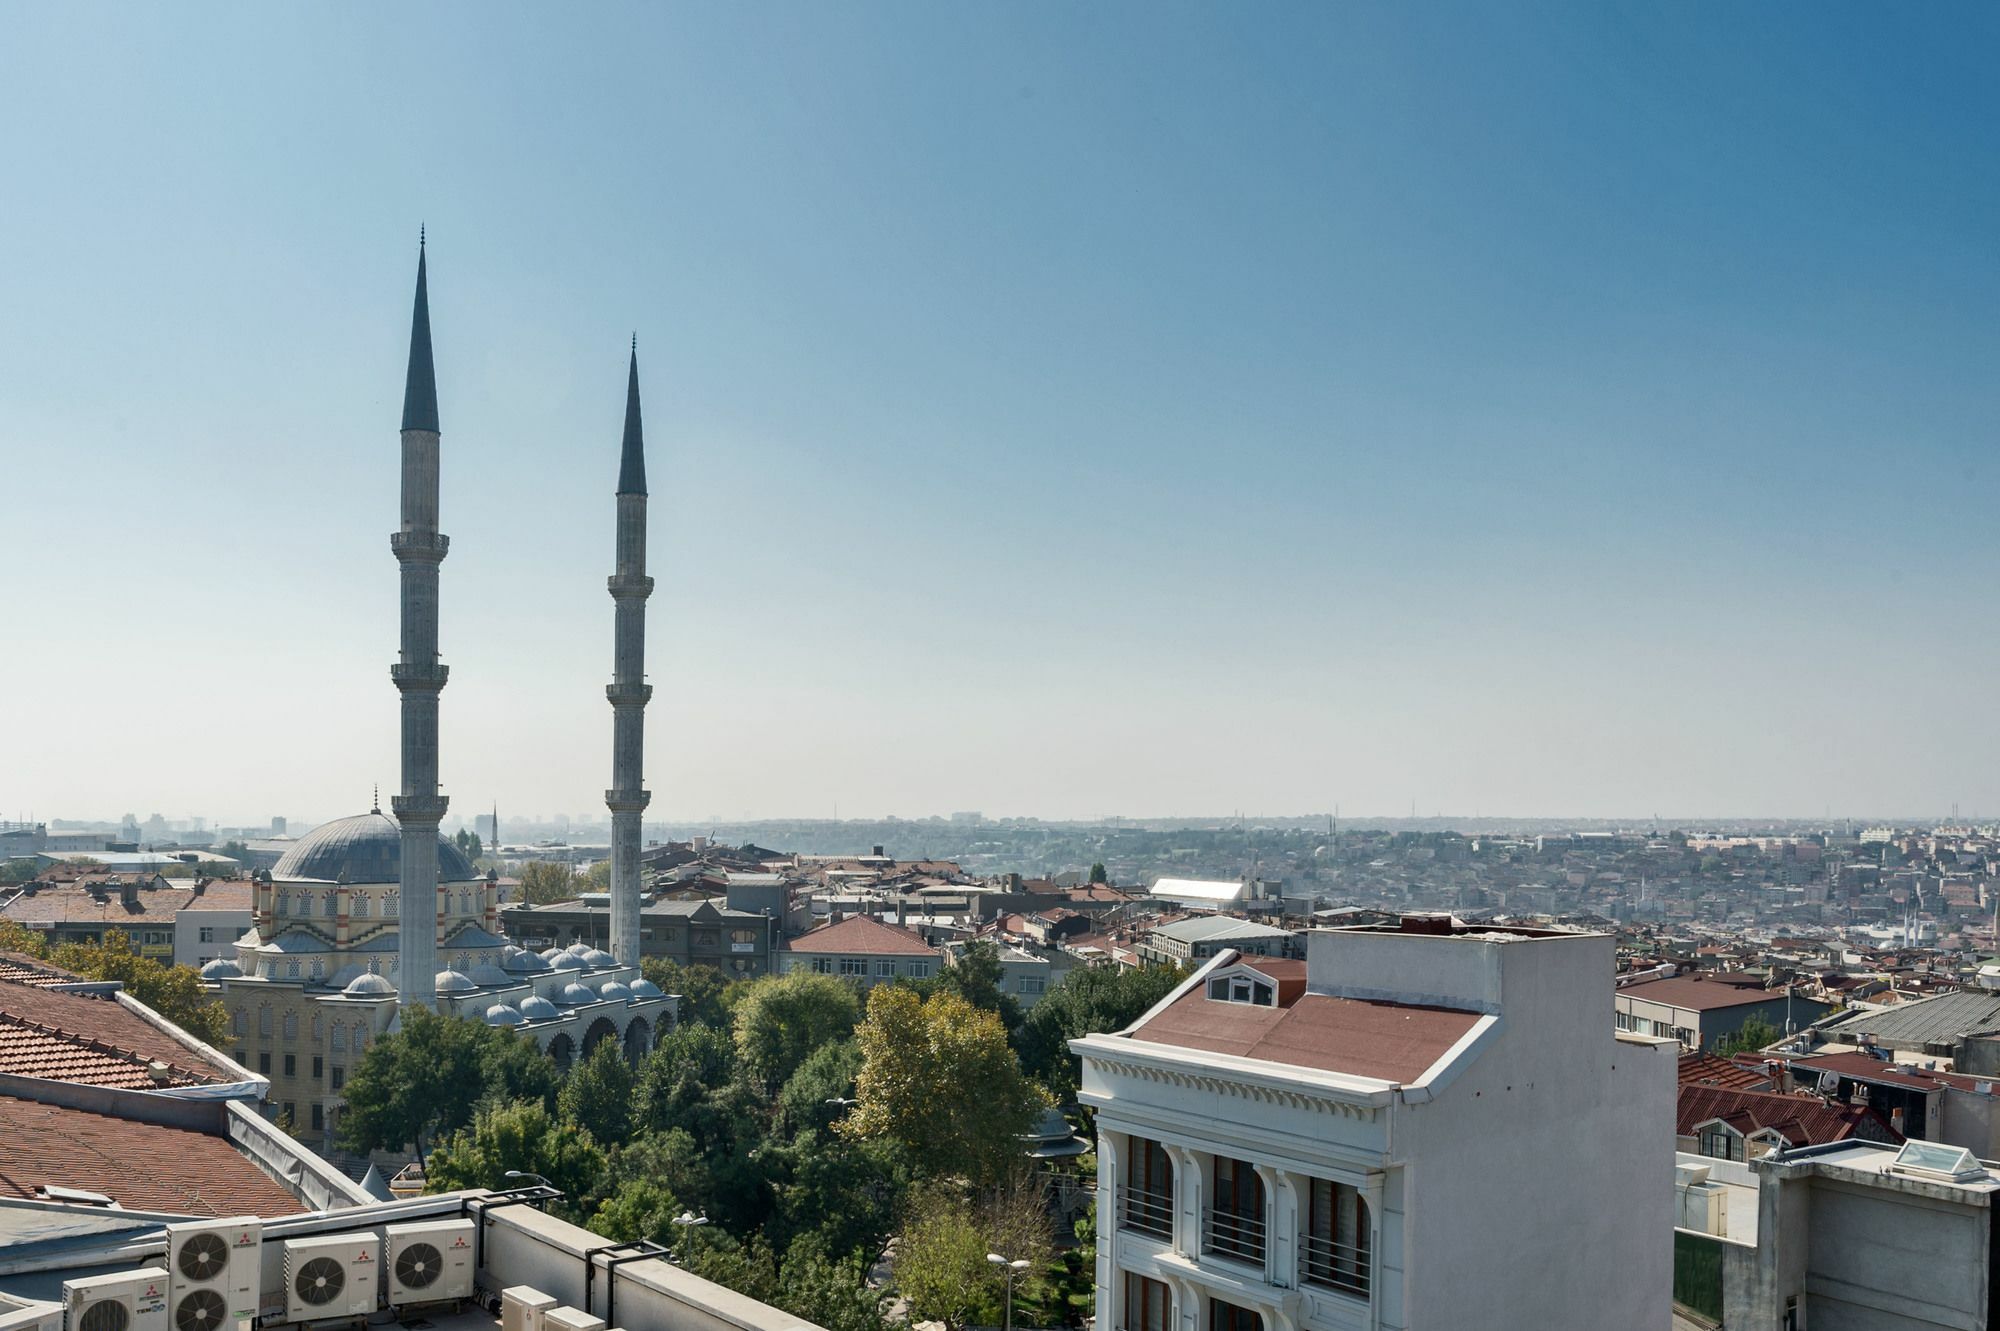 Marnas Hotels Istanbul Exterior photo